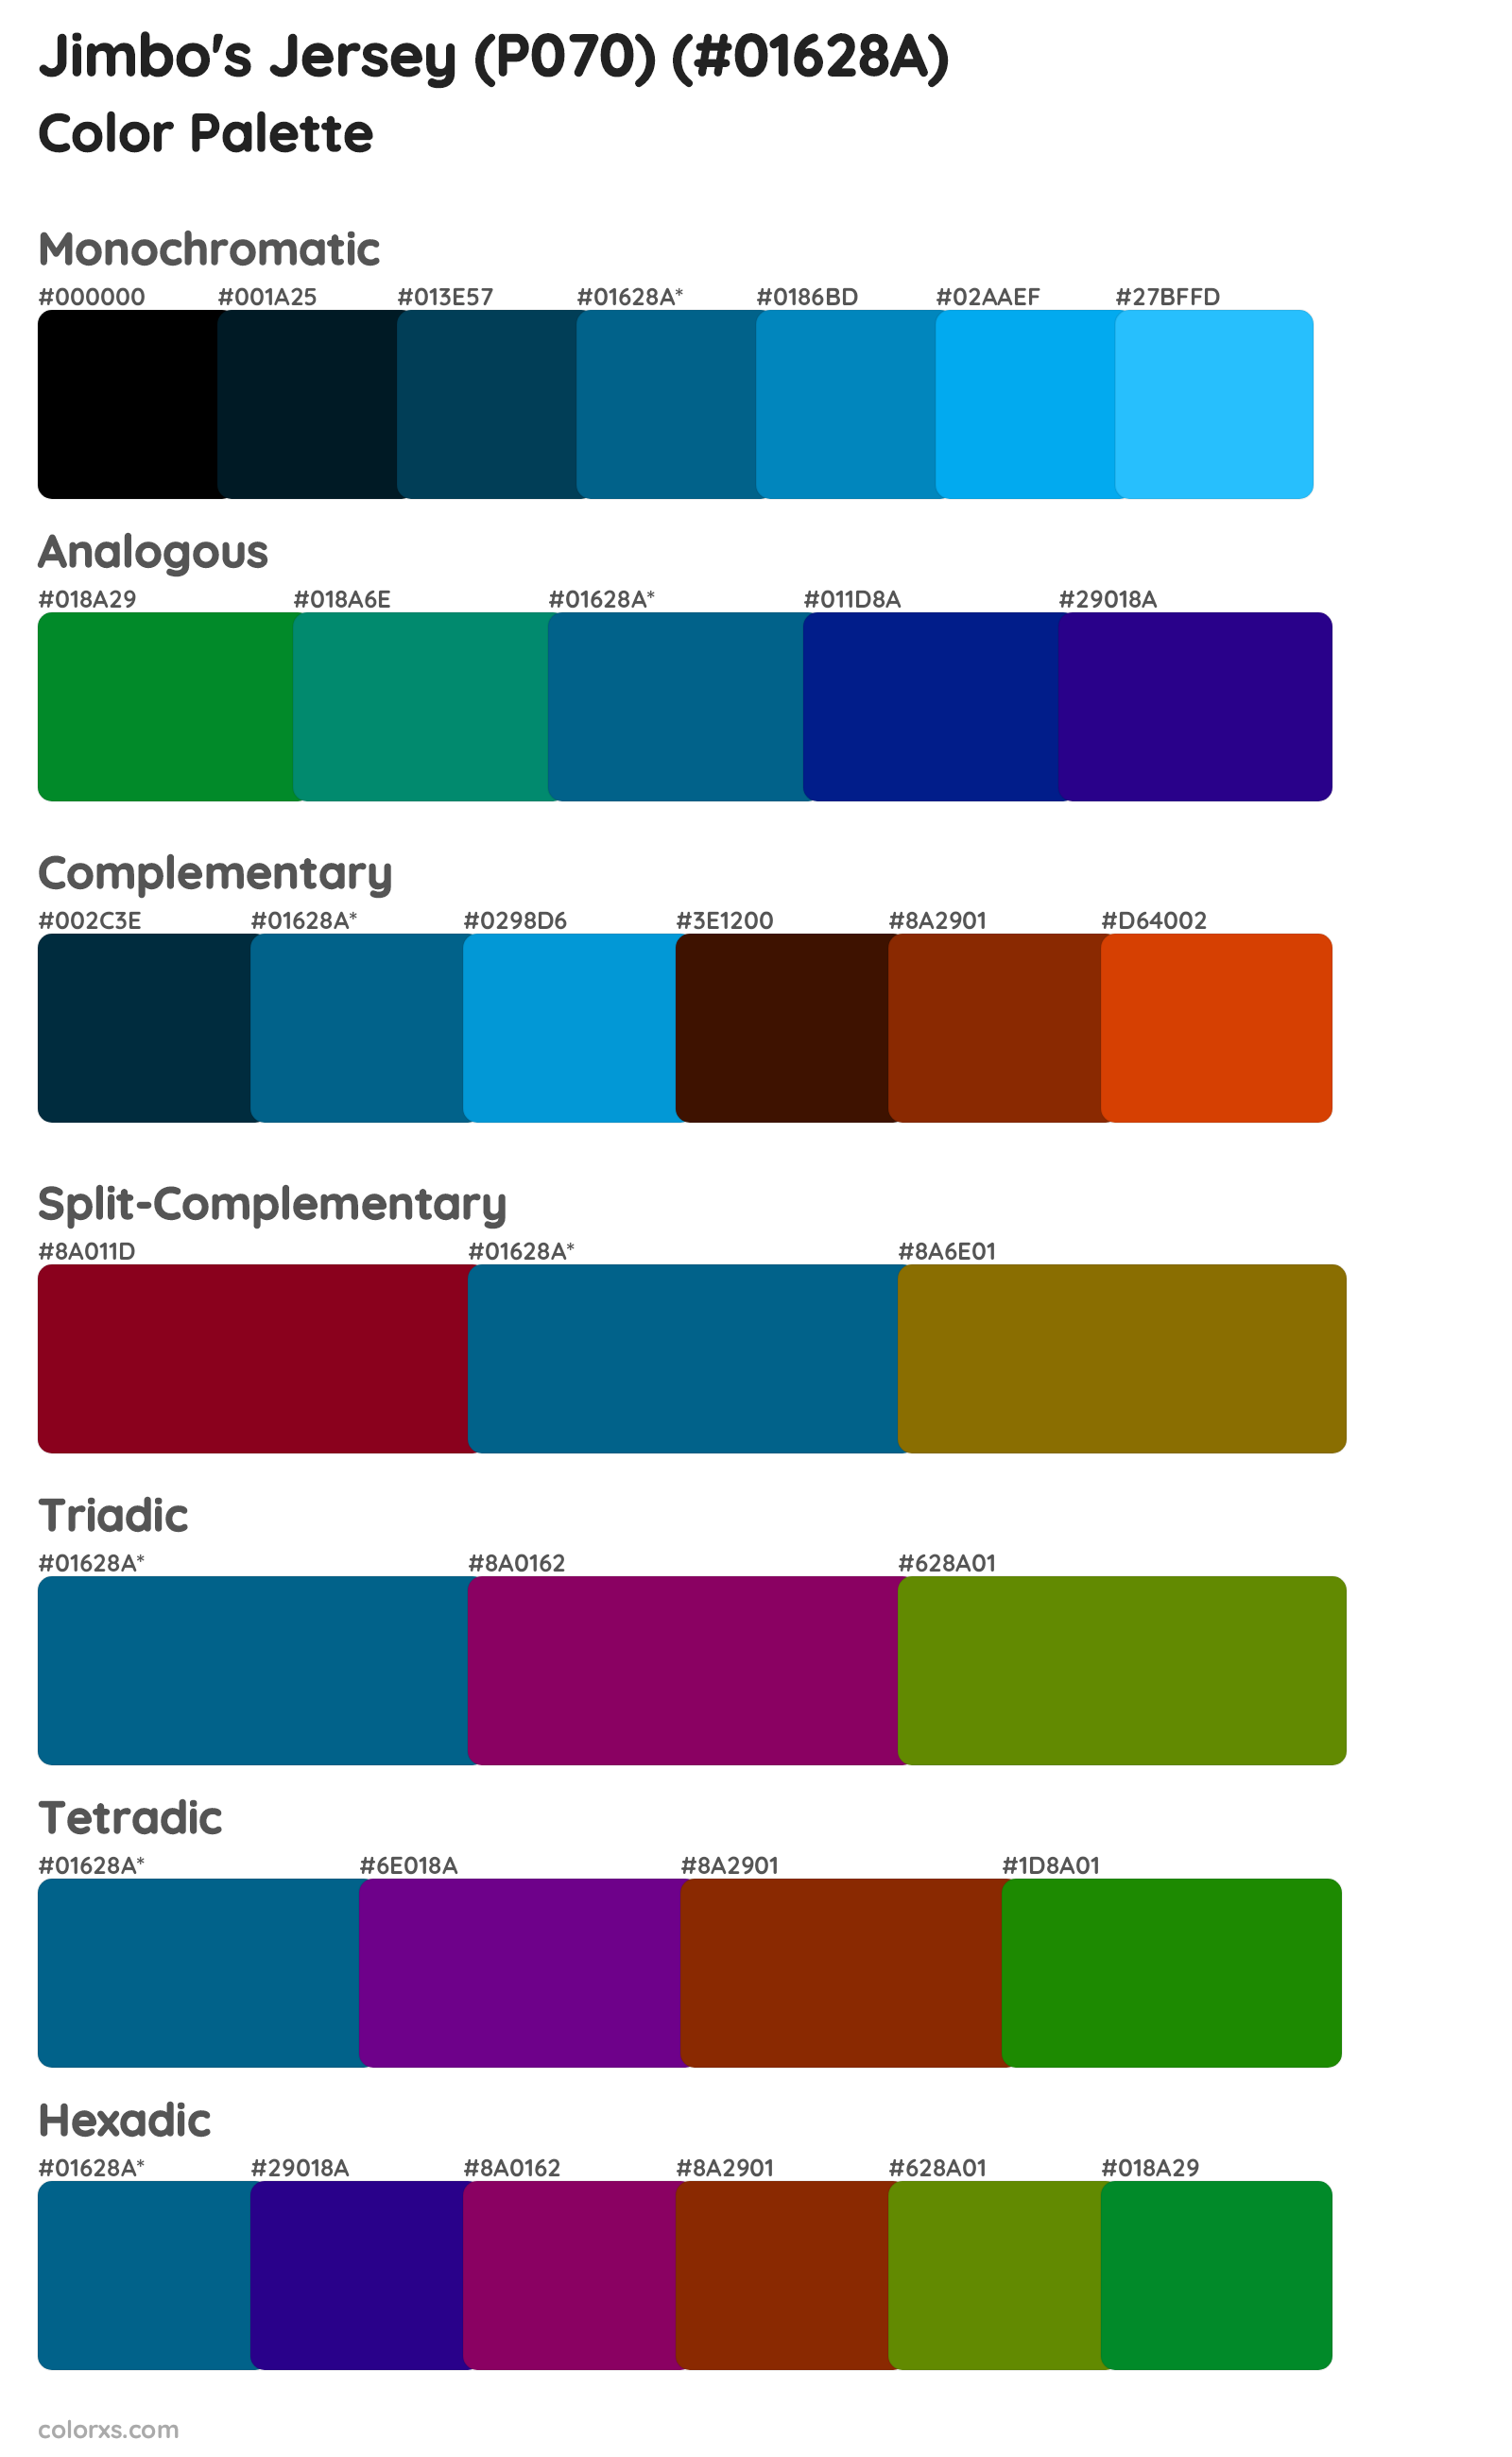 Jimbo's Jersey (P070) Color Scheme Palettes